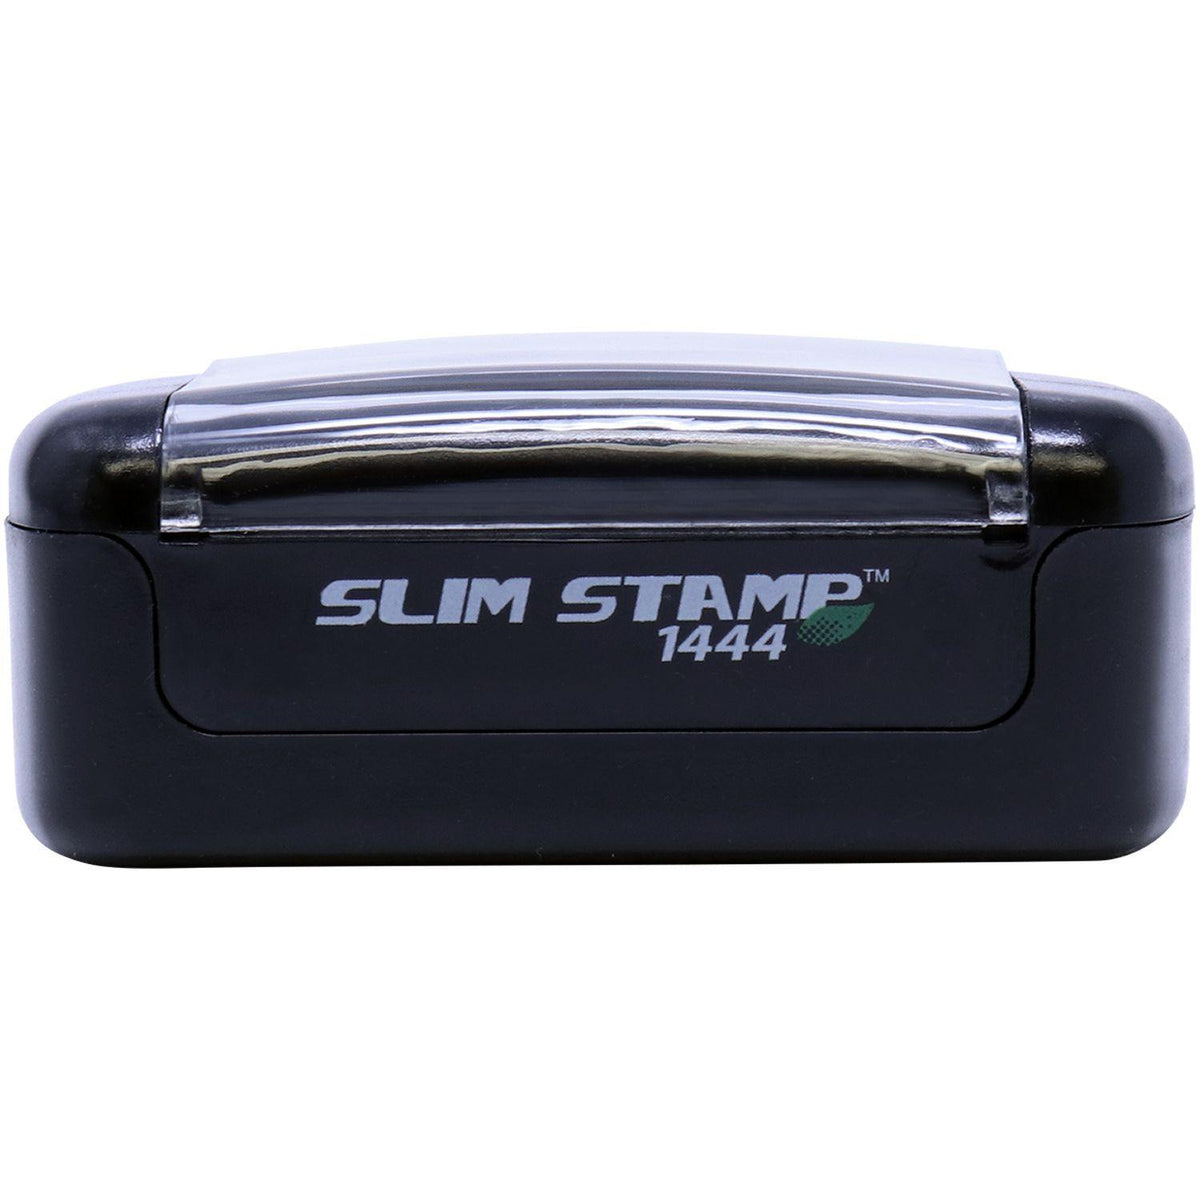 Alt View of Slim Pre Inked Trustee Exhibit Stamp Front View